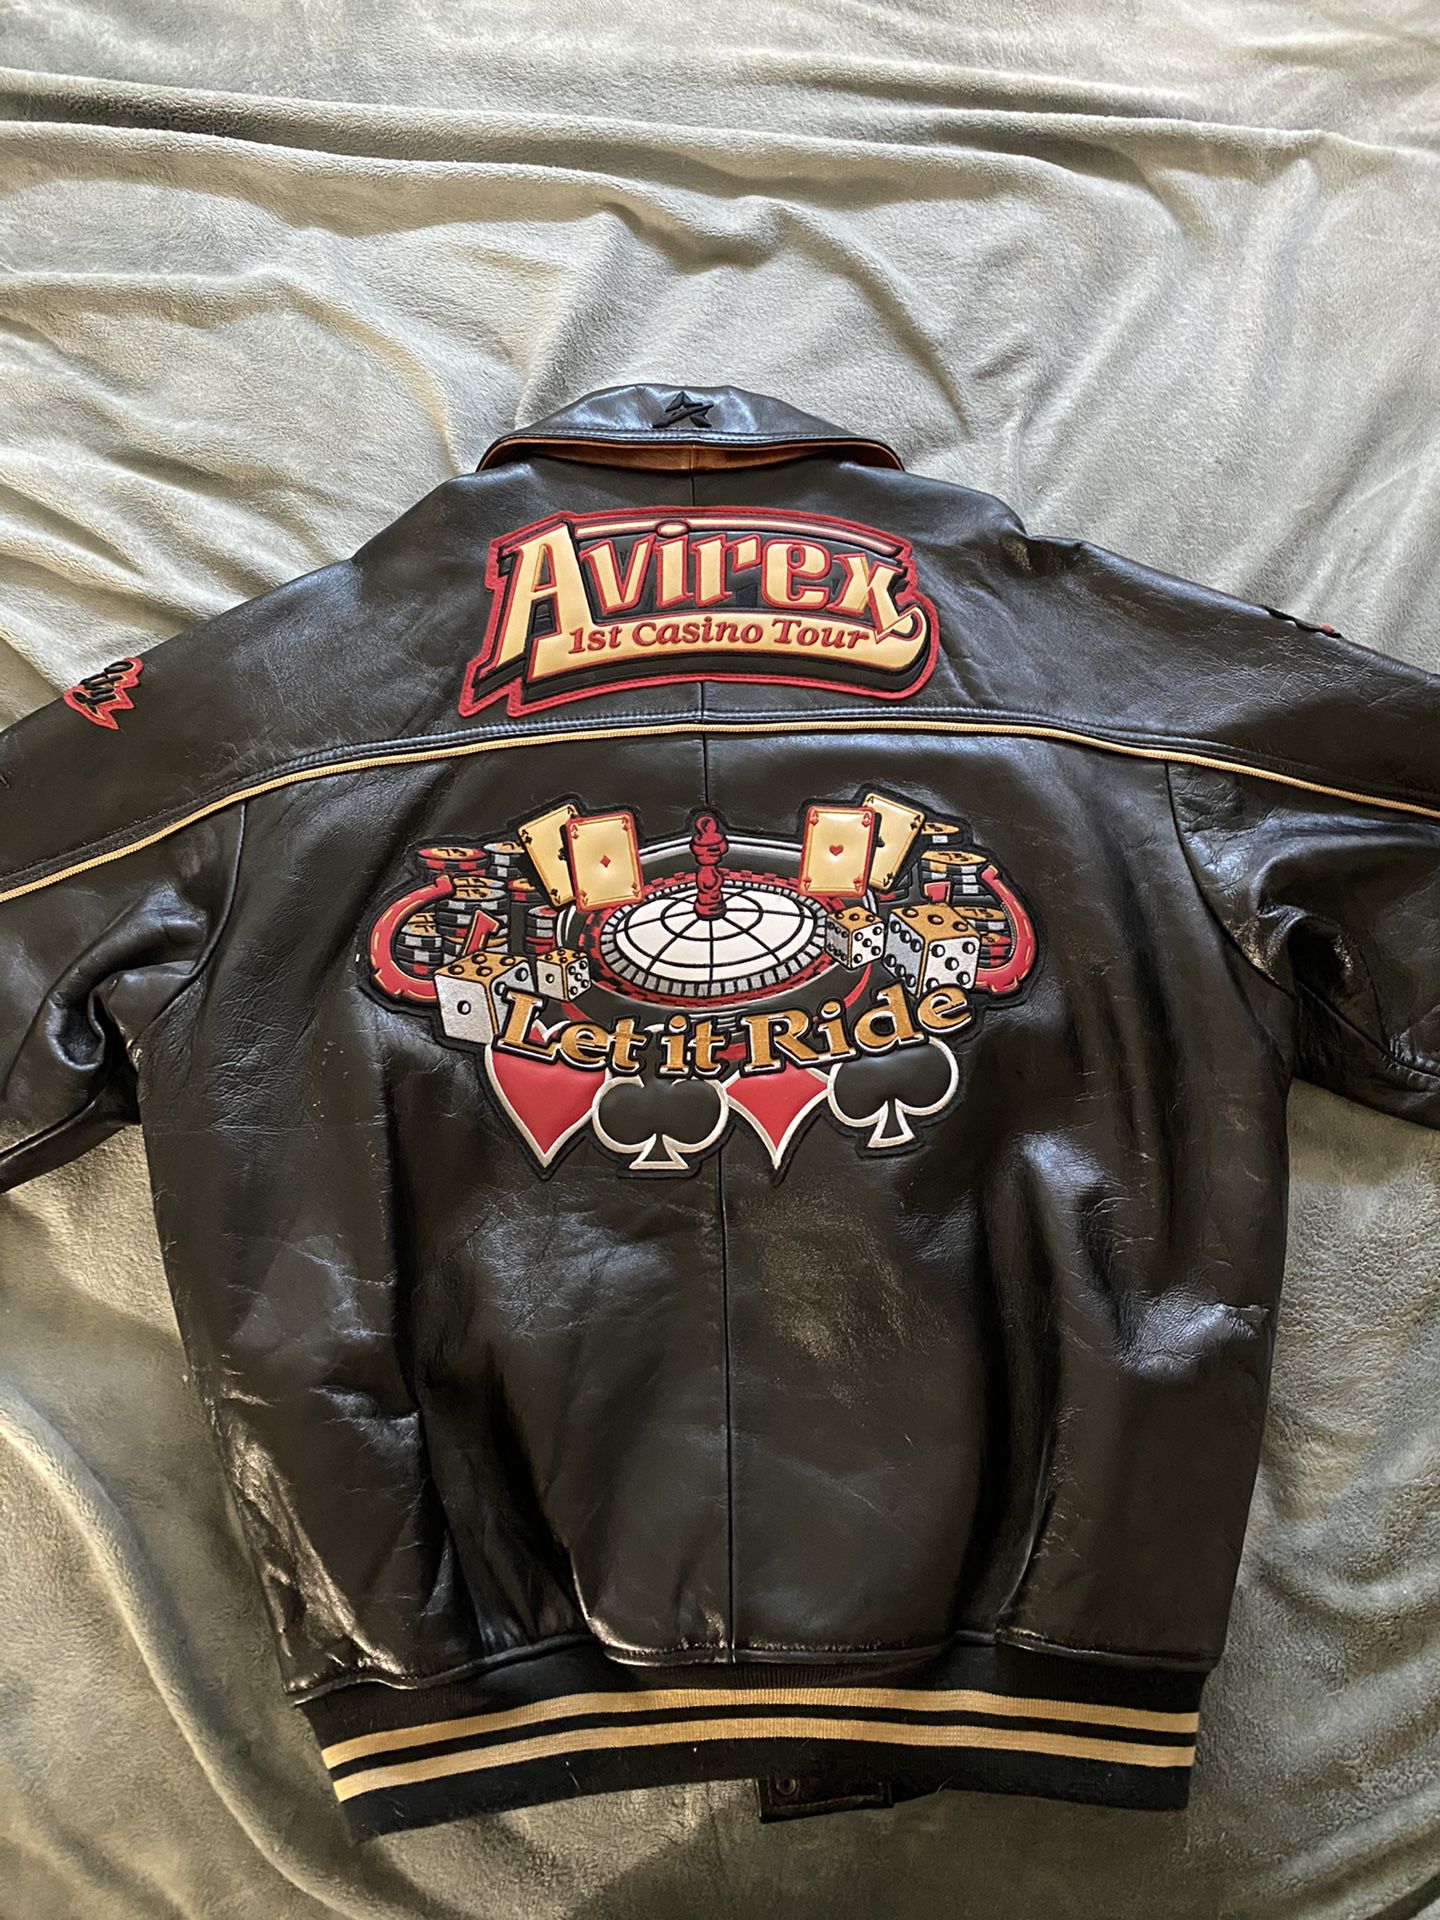 Avirex jacket. 1st Casino Tour. Let It Ride.